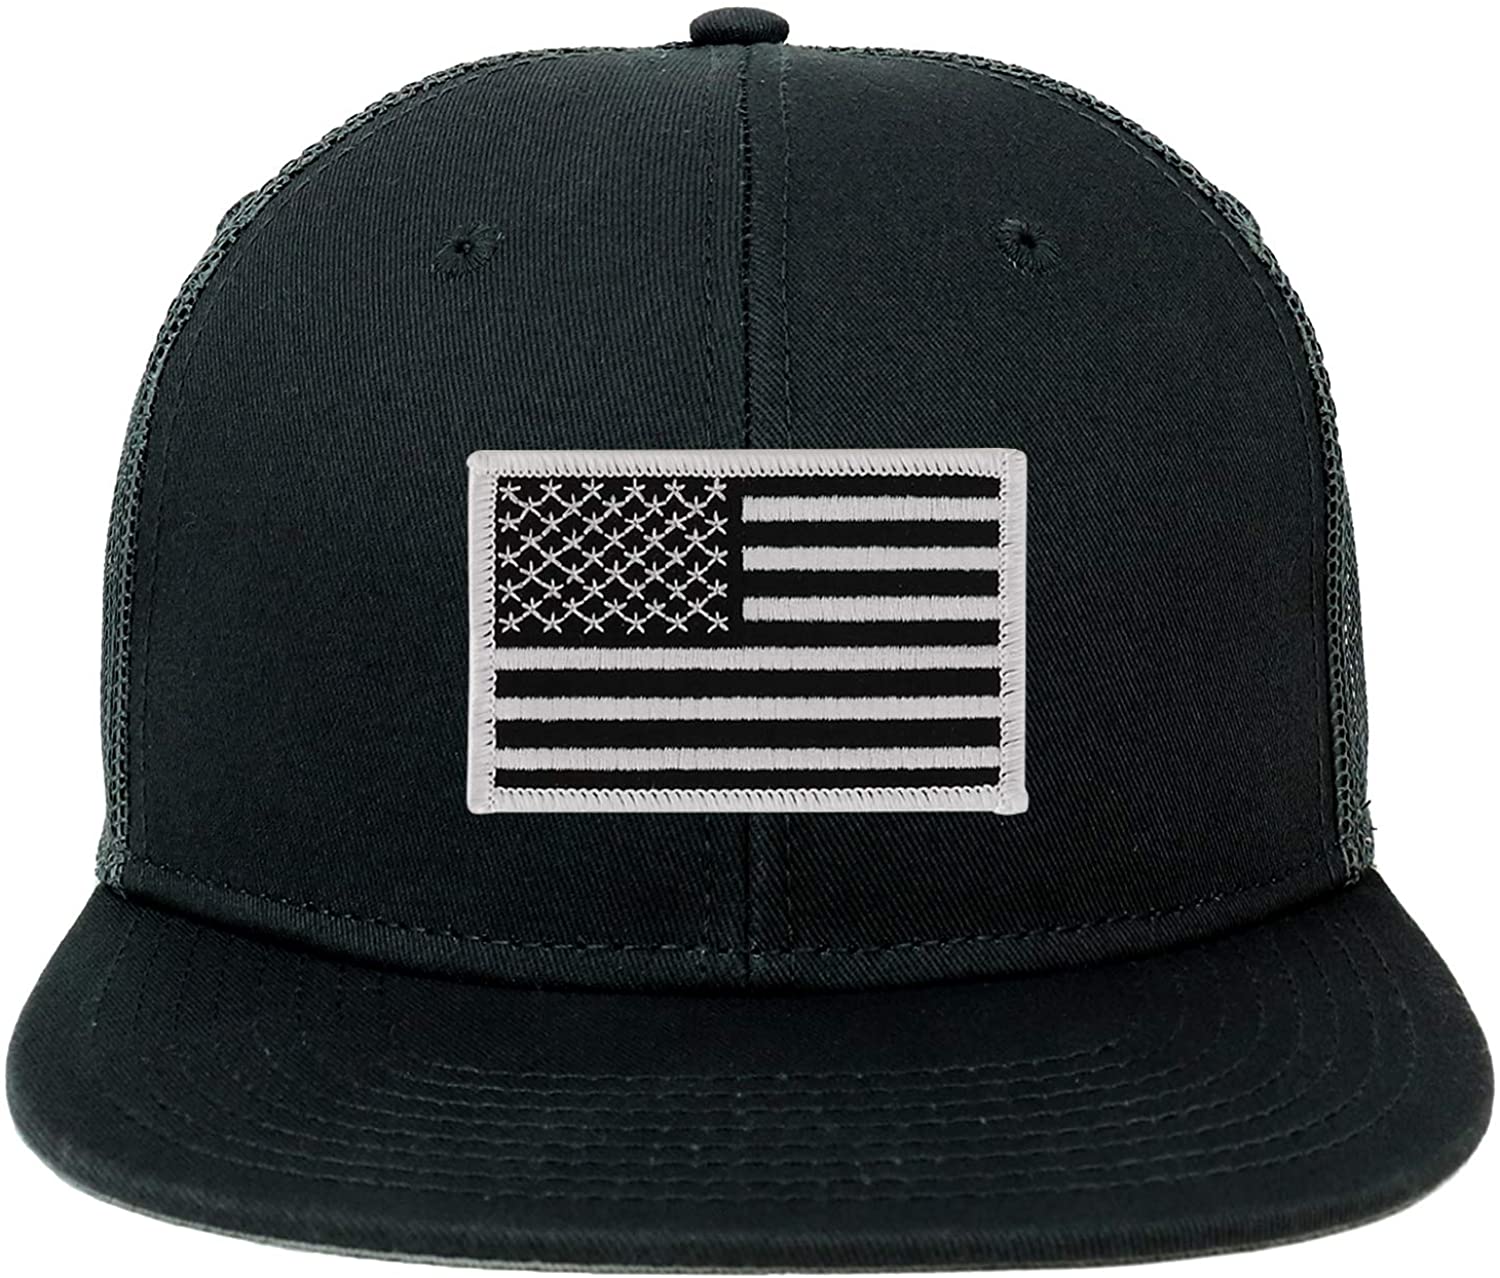 Armycrew Oversize XXL Black White USA Flag Patch Flatbill Mesh Snapback Cap